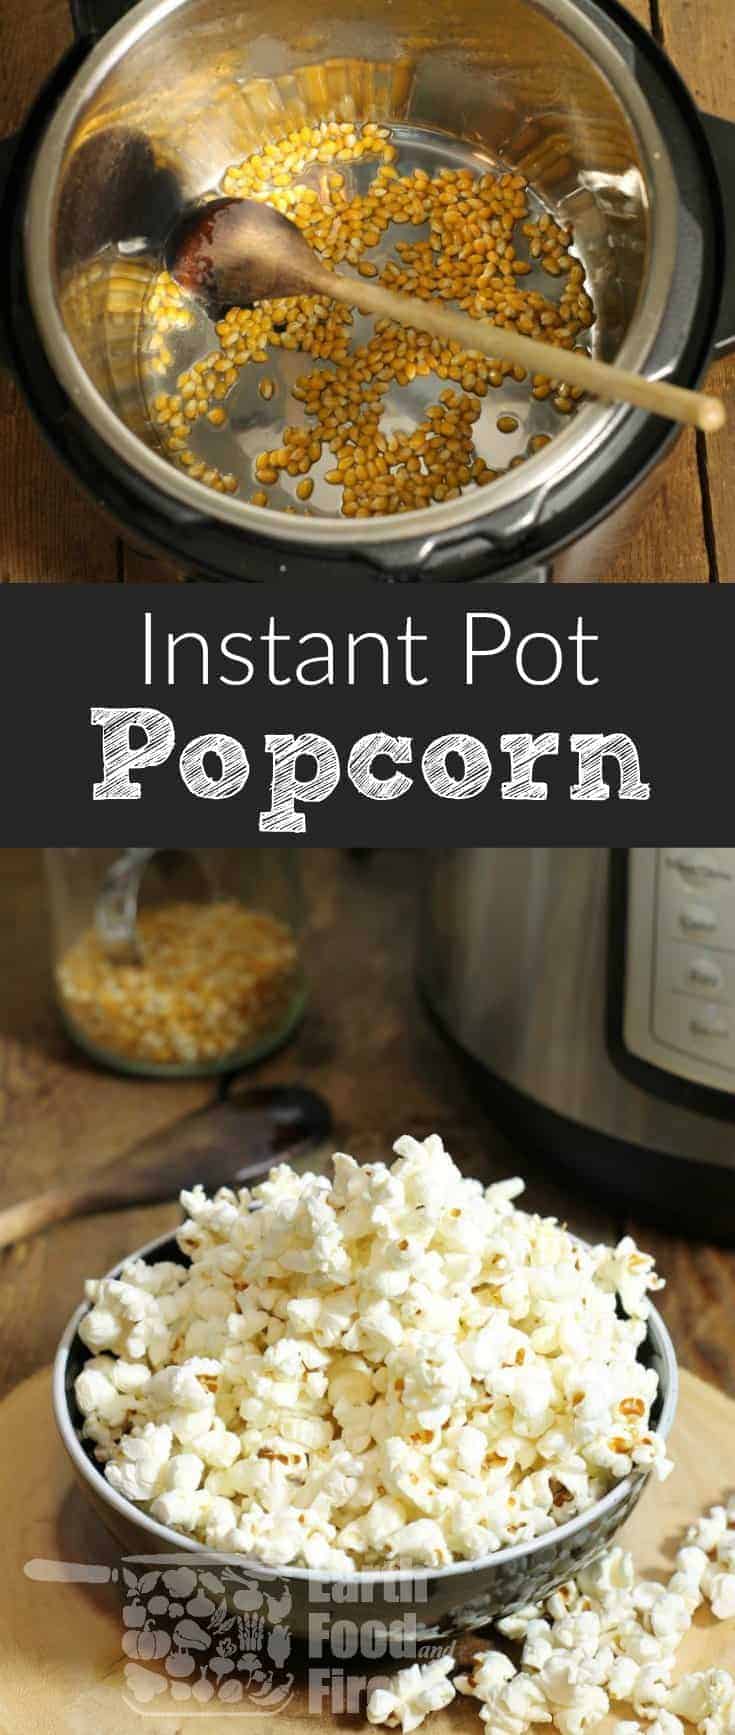 Instant Pot Popcorn + 6 Popular Seasonings - Earth, Food, and Fire